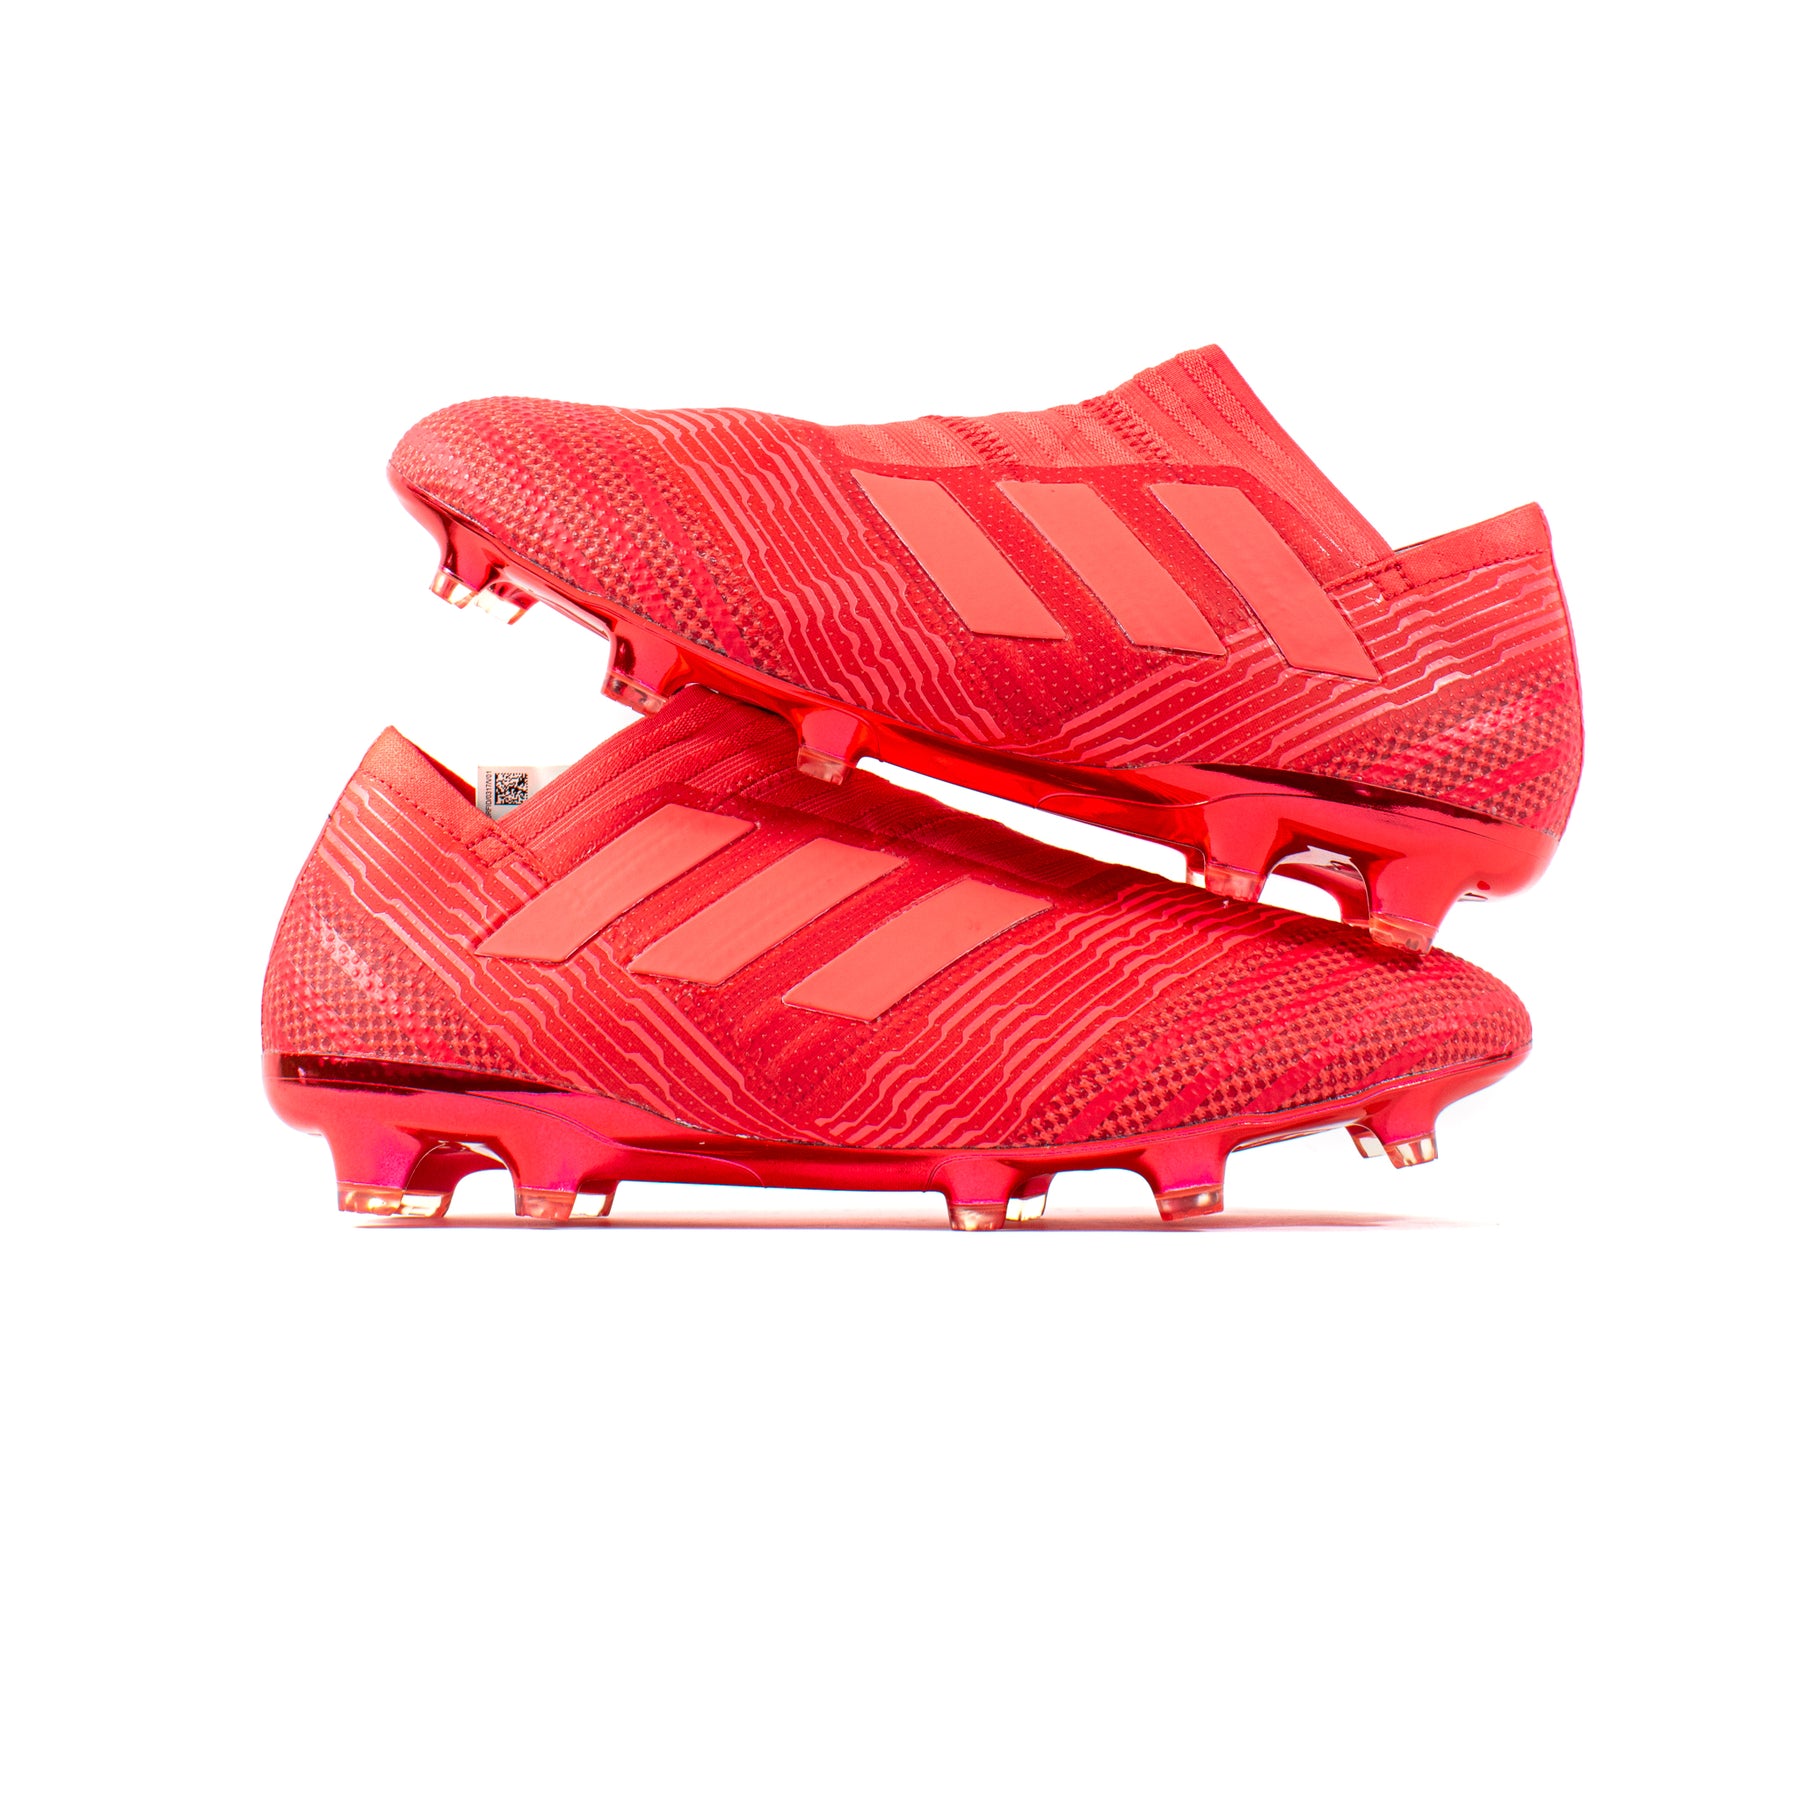 Adidas Nemeziz 17+ Red FG Classic Soccer